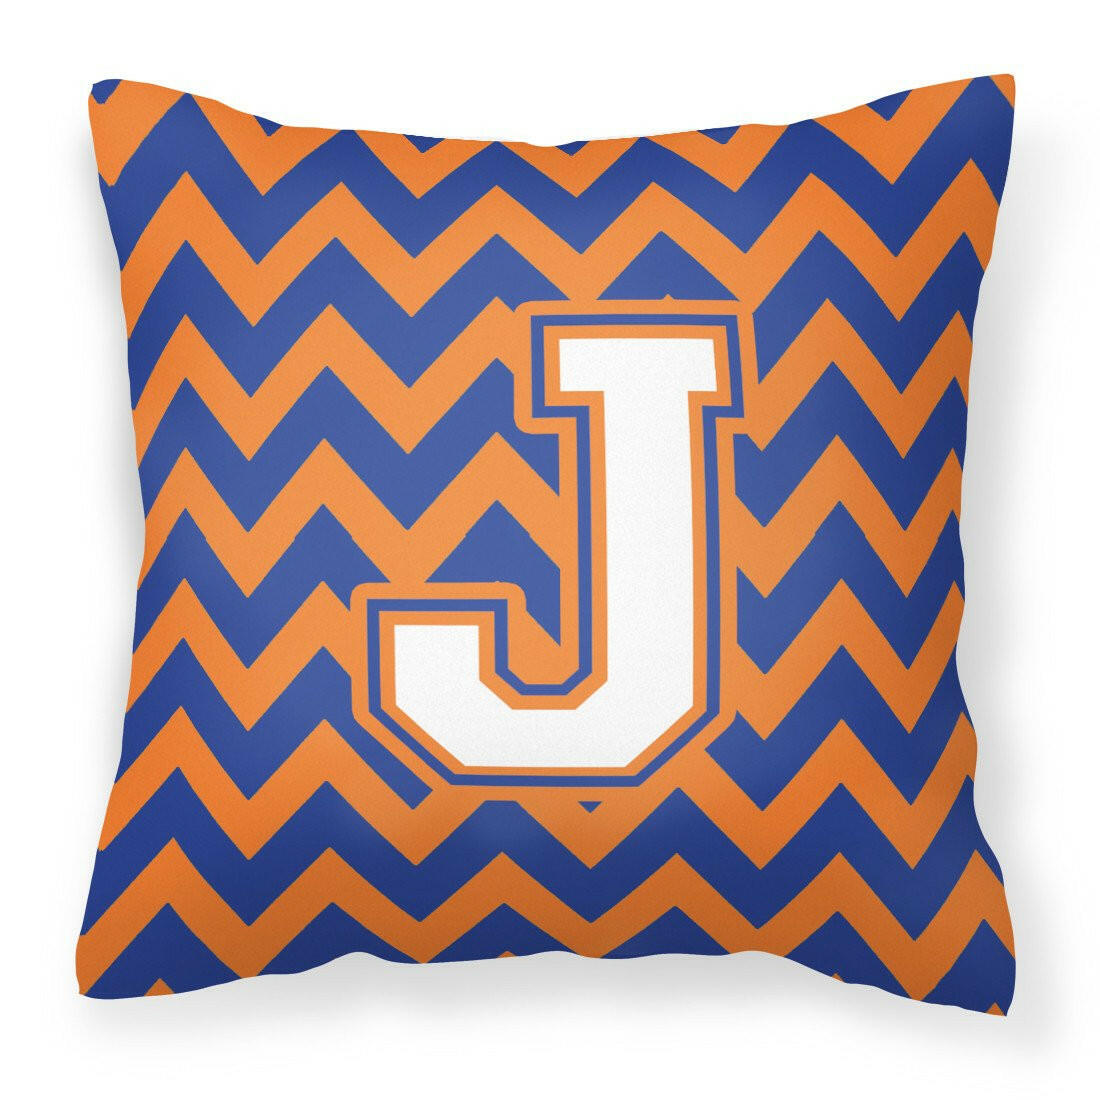 Letter J Chevron Blue and Orange #3 Fabric Decorative Pillow CJ1060-JPW1414 by Caroline's Treasures